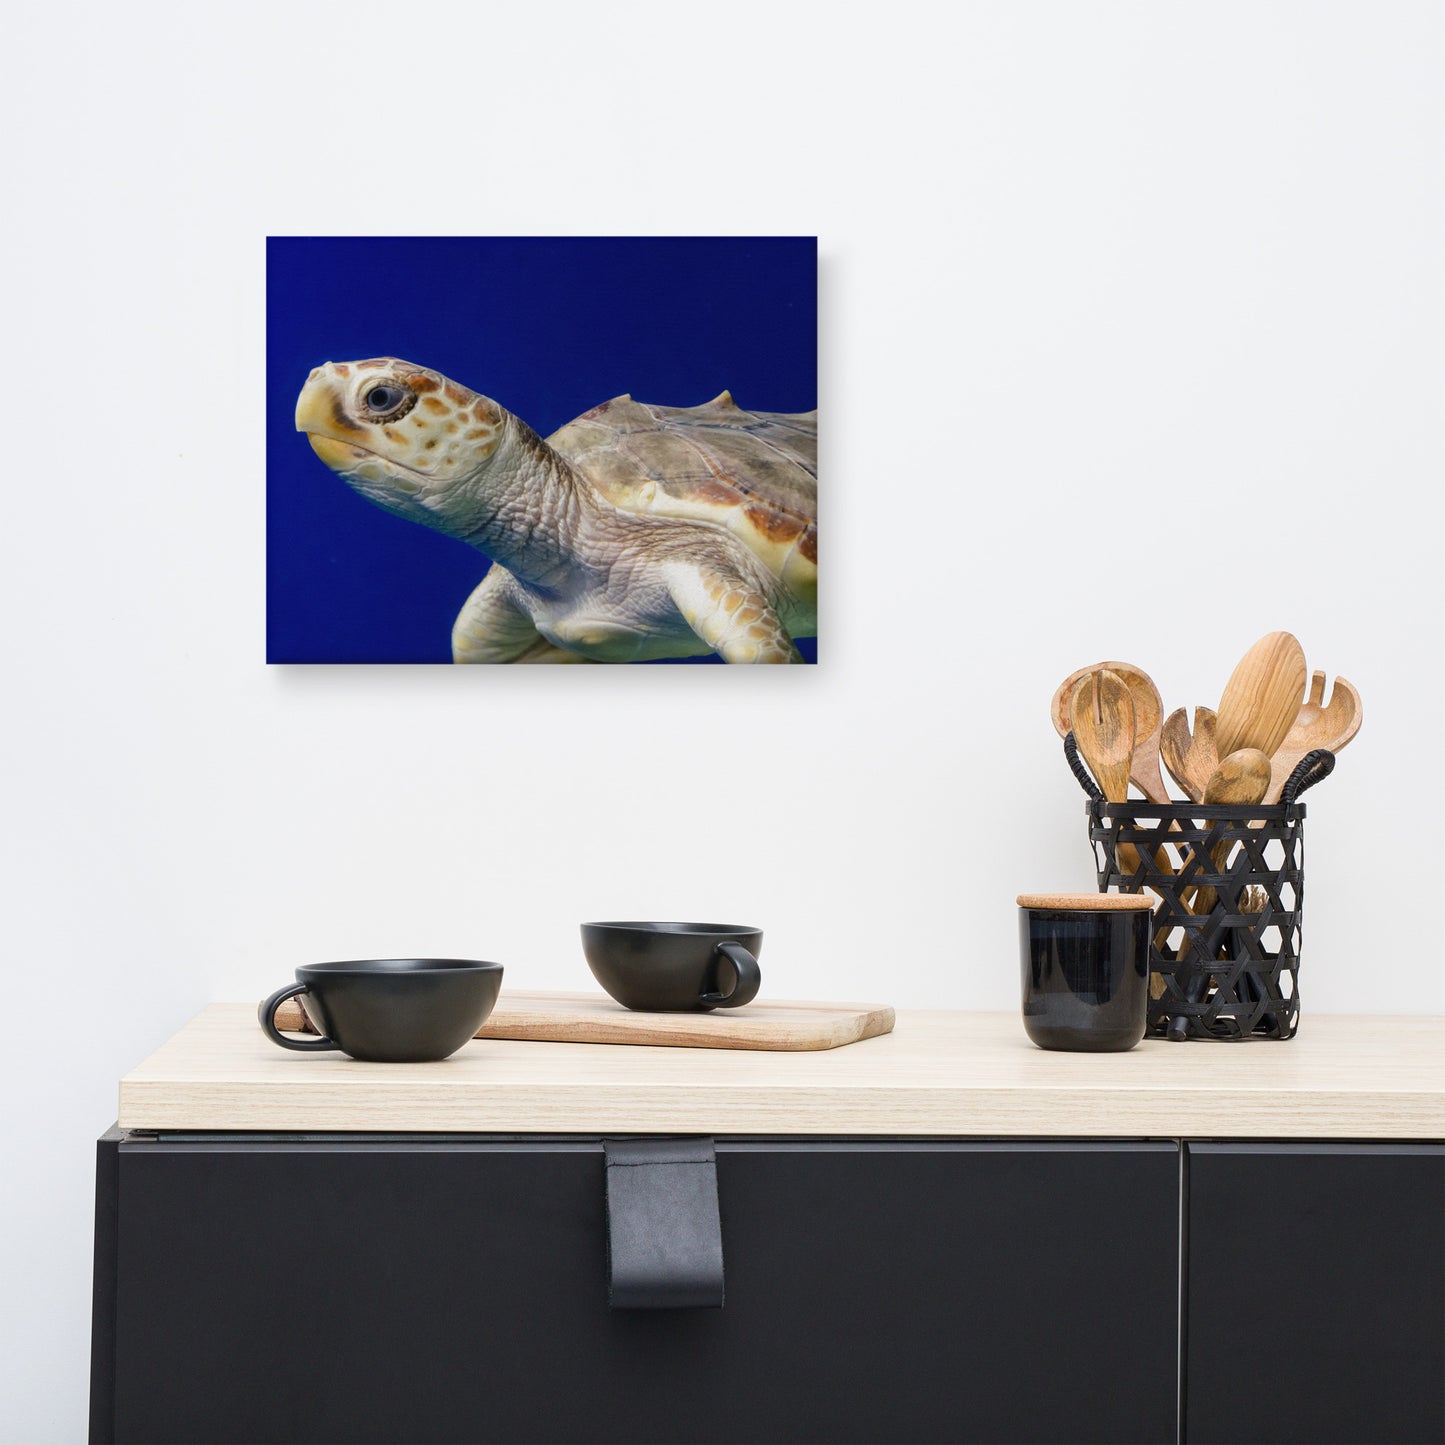 Sea Turtle 2 Animal / Wildlife Photograph Canvas Wall Art Prints